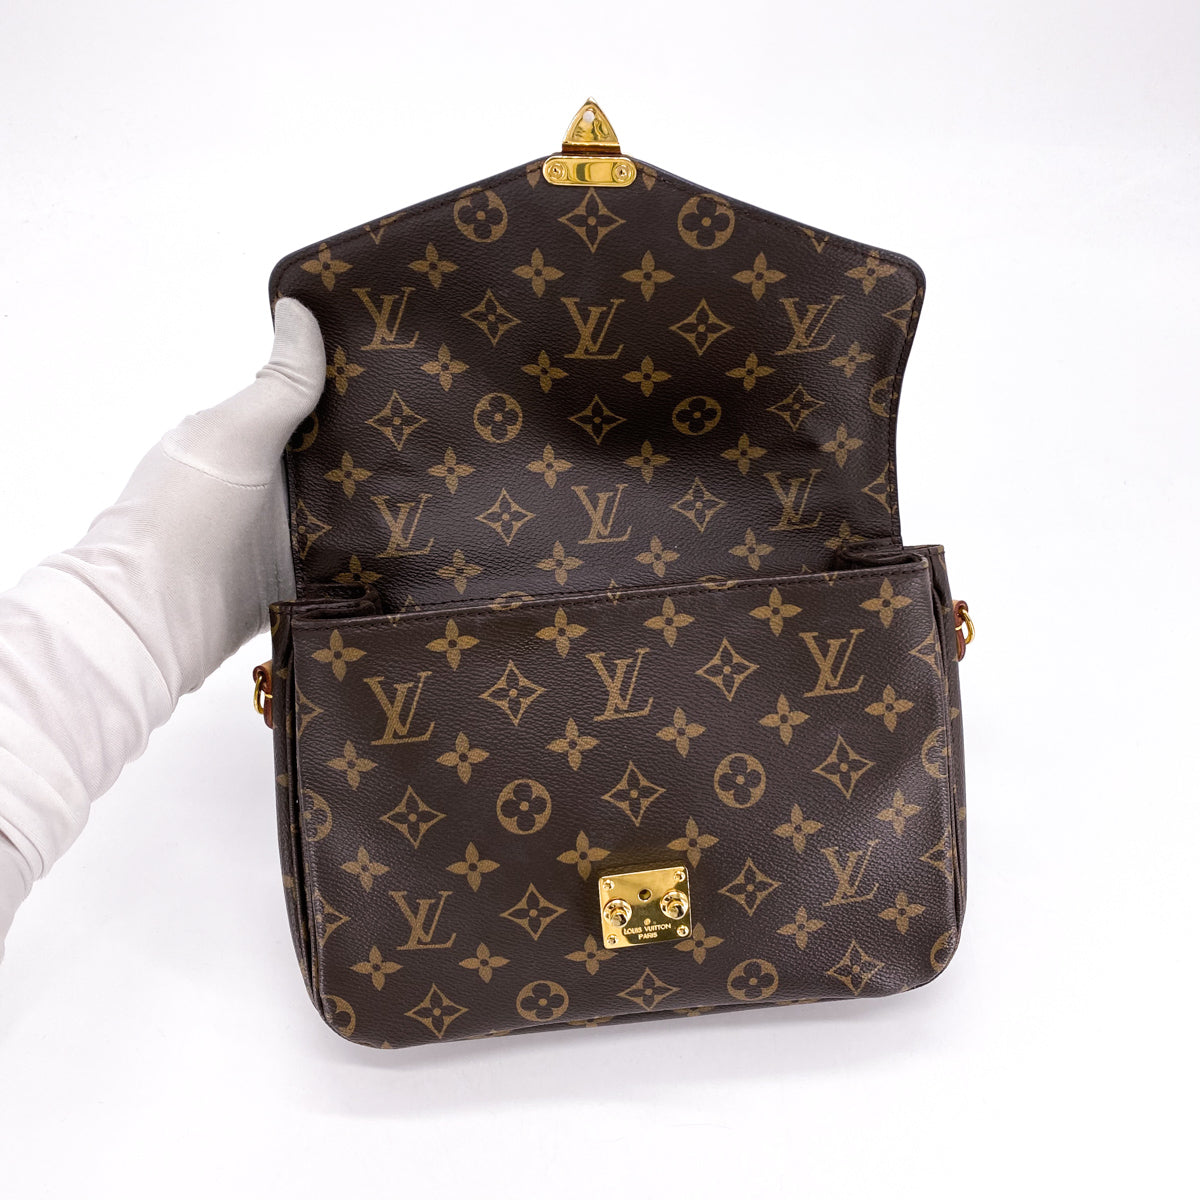 F#%$ The Louis Vuitton POCHETTE METIS???: Trivia, Opinions, Models